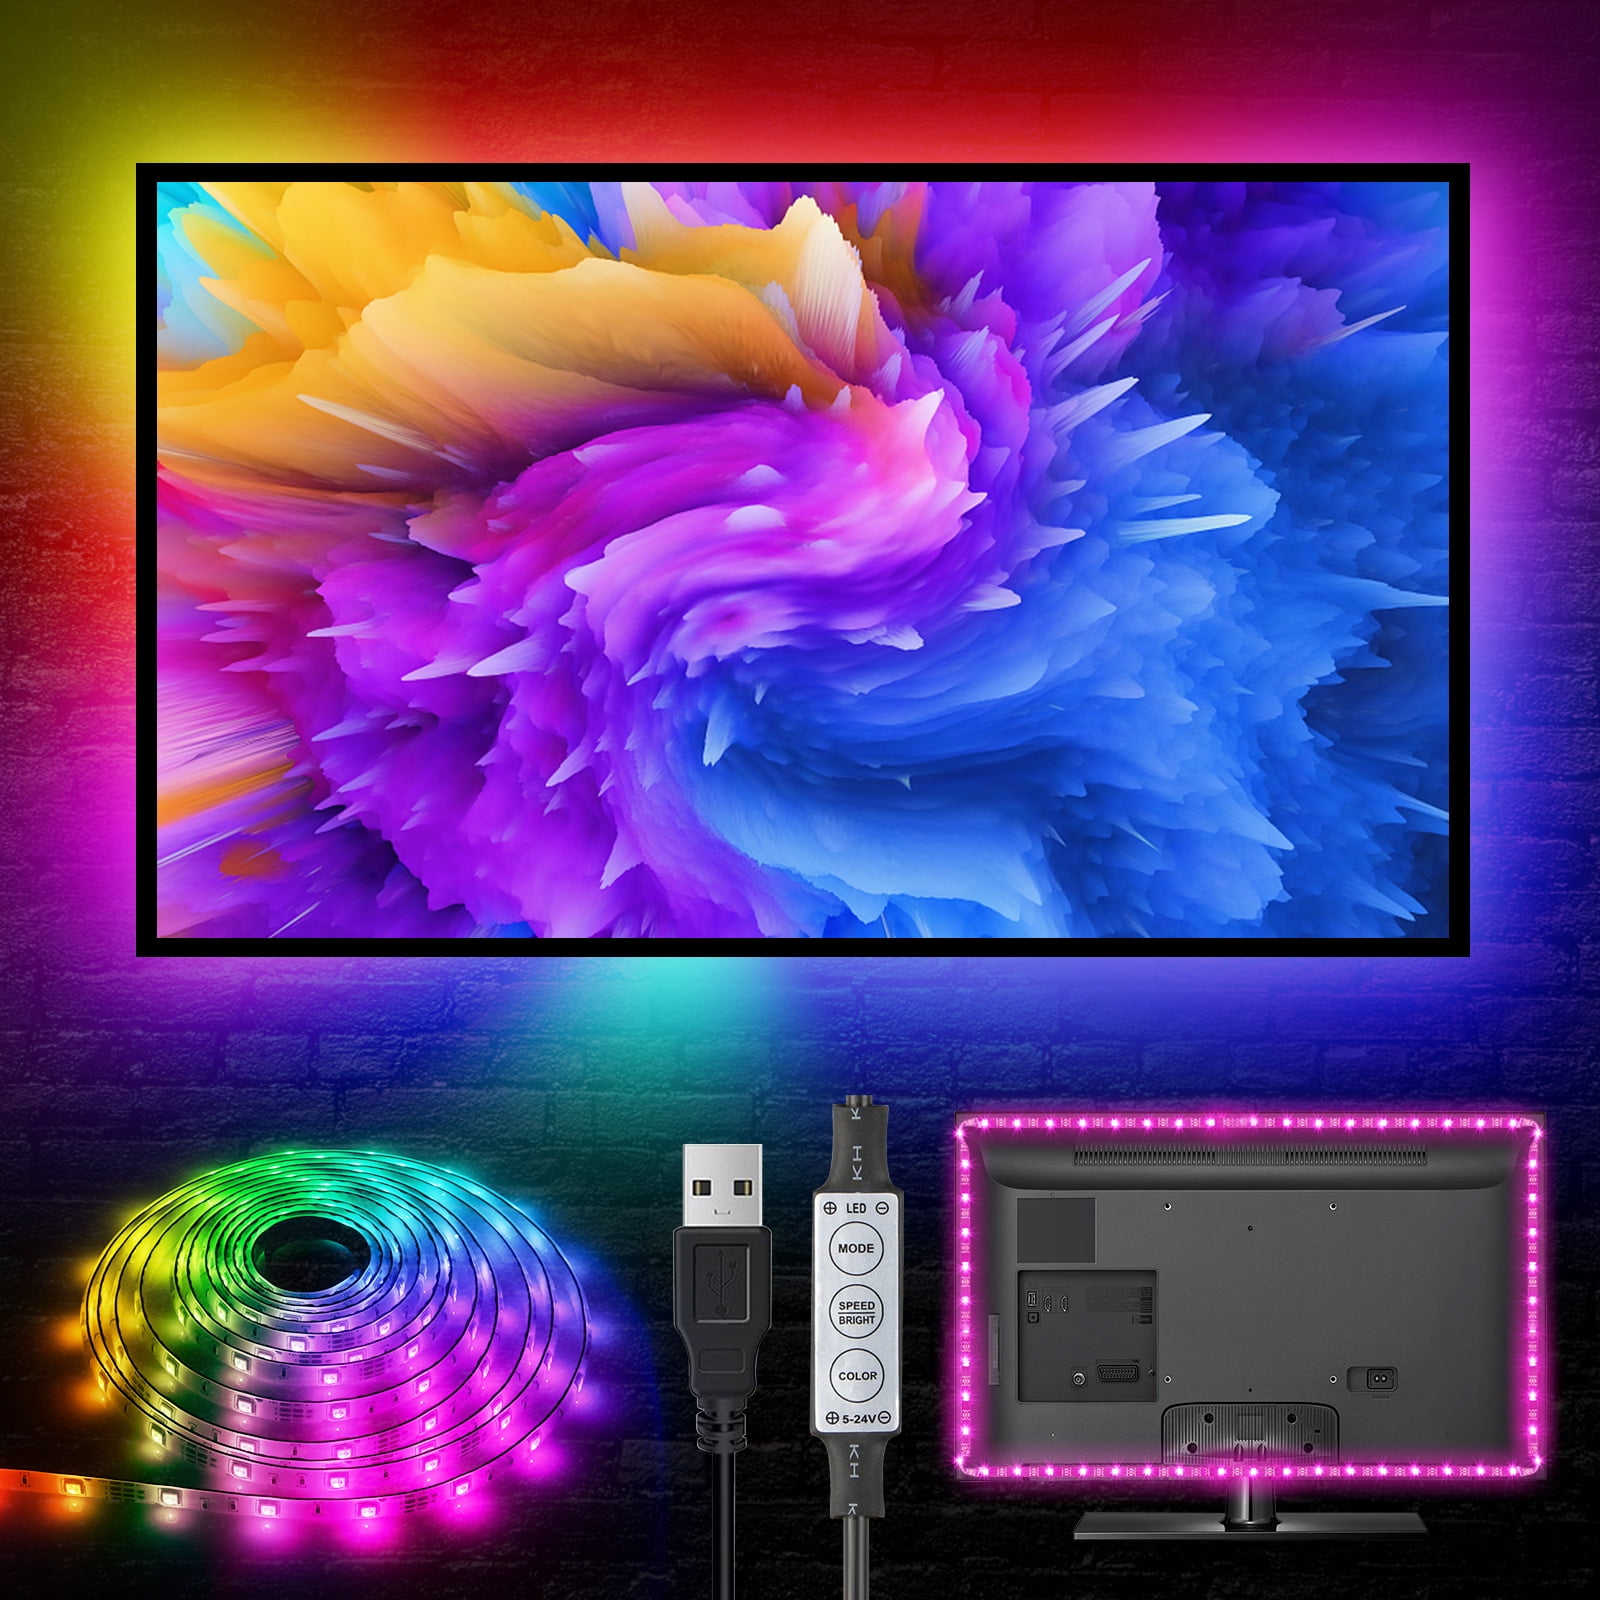 TV USB LED BACKLIGHT 2 X 50 cm FLEXI STRIP LIGHTS COOL WHITE OR FOR PC MONITOR 